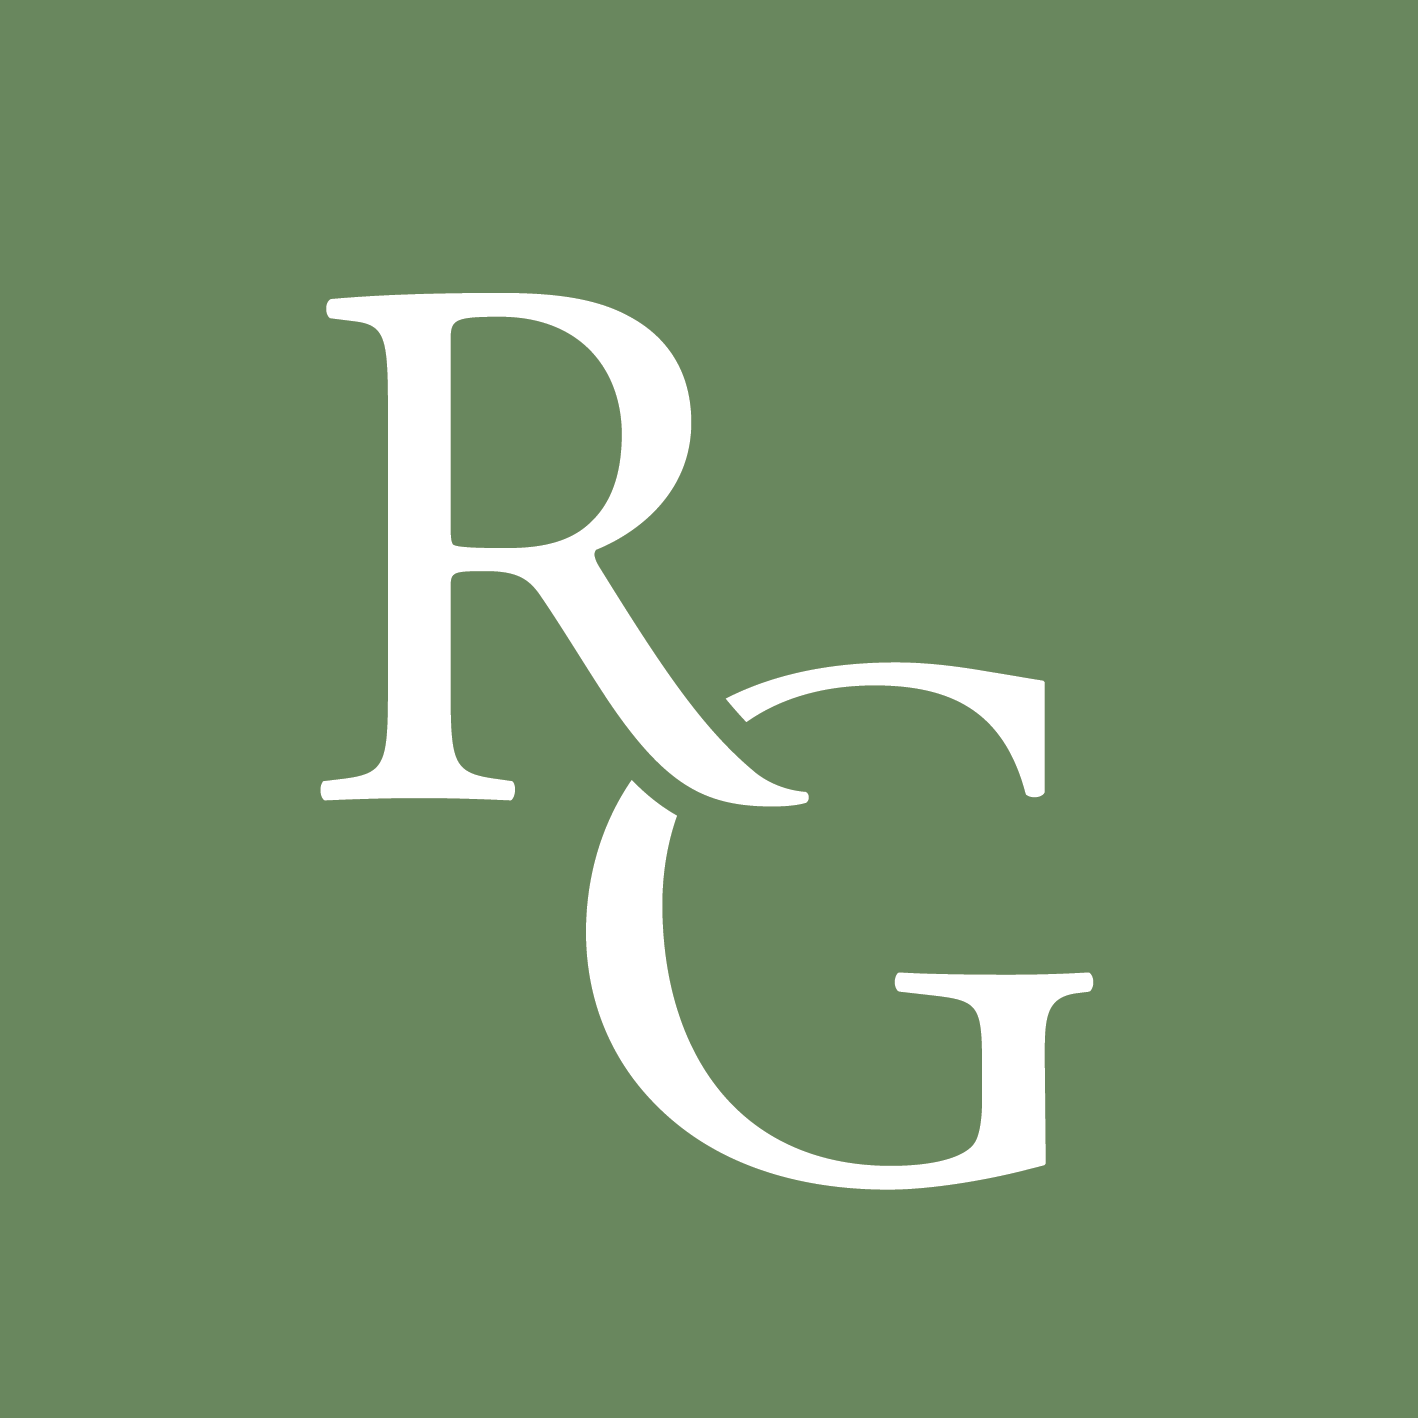 Company logo of Rich Glen Estate